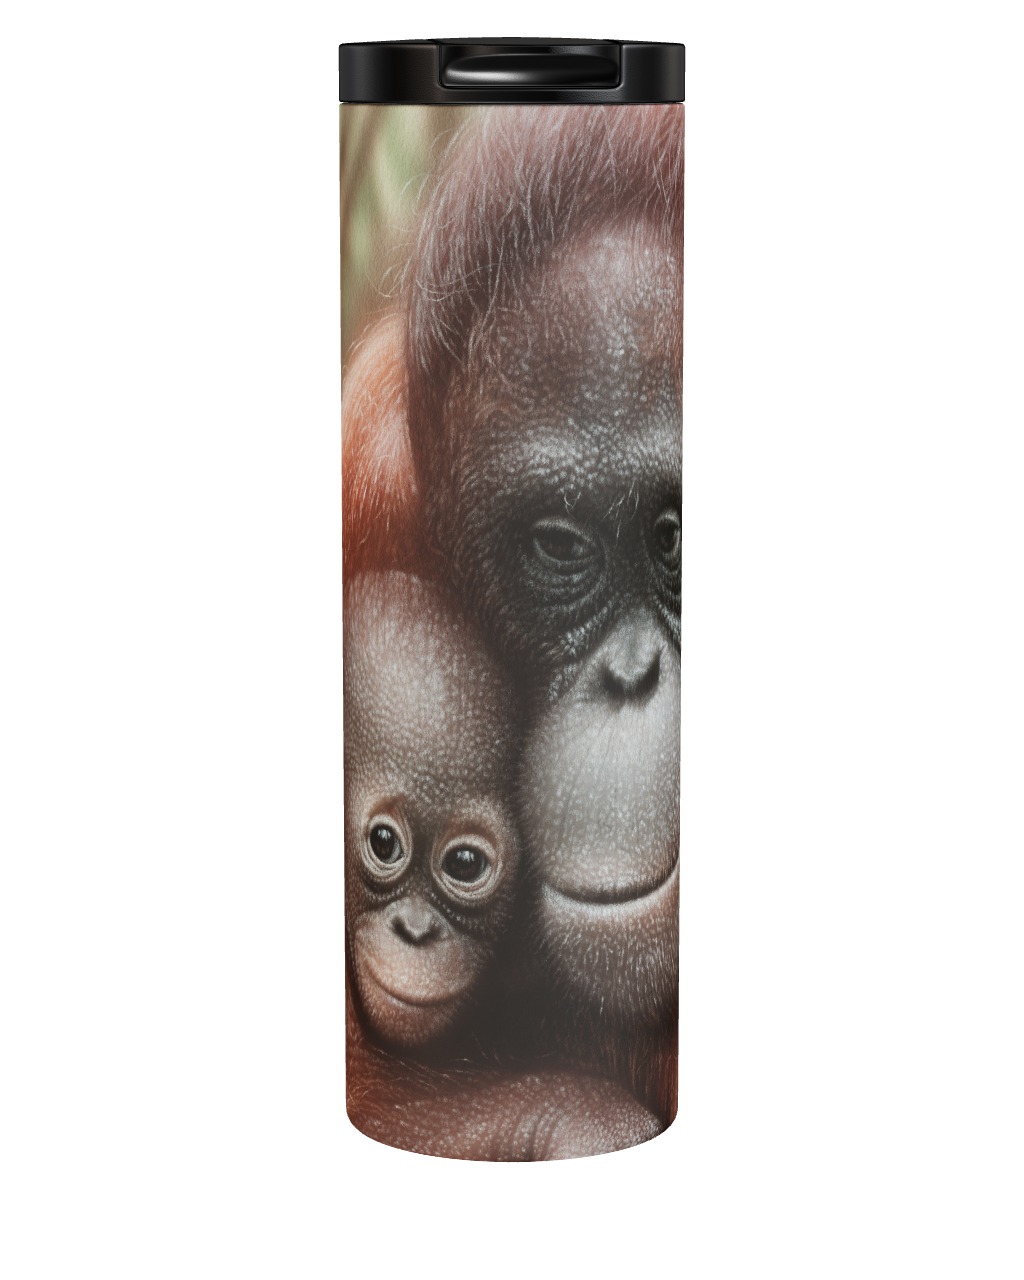 Snuggled - Orangutan Tumbler